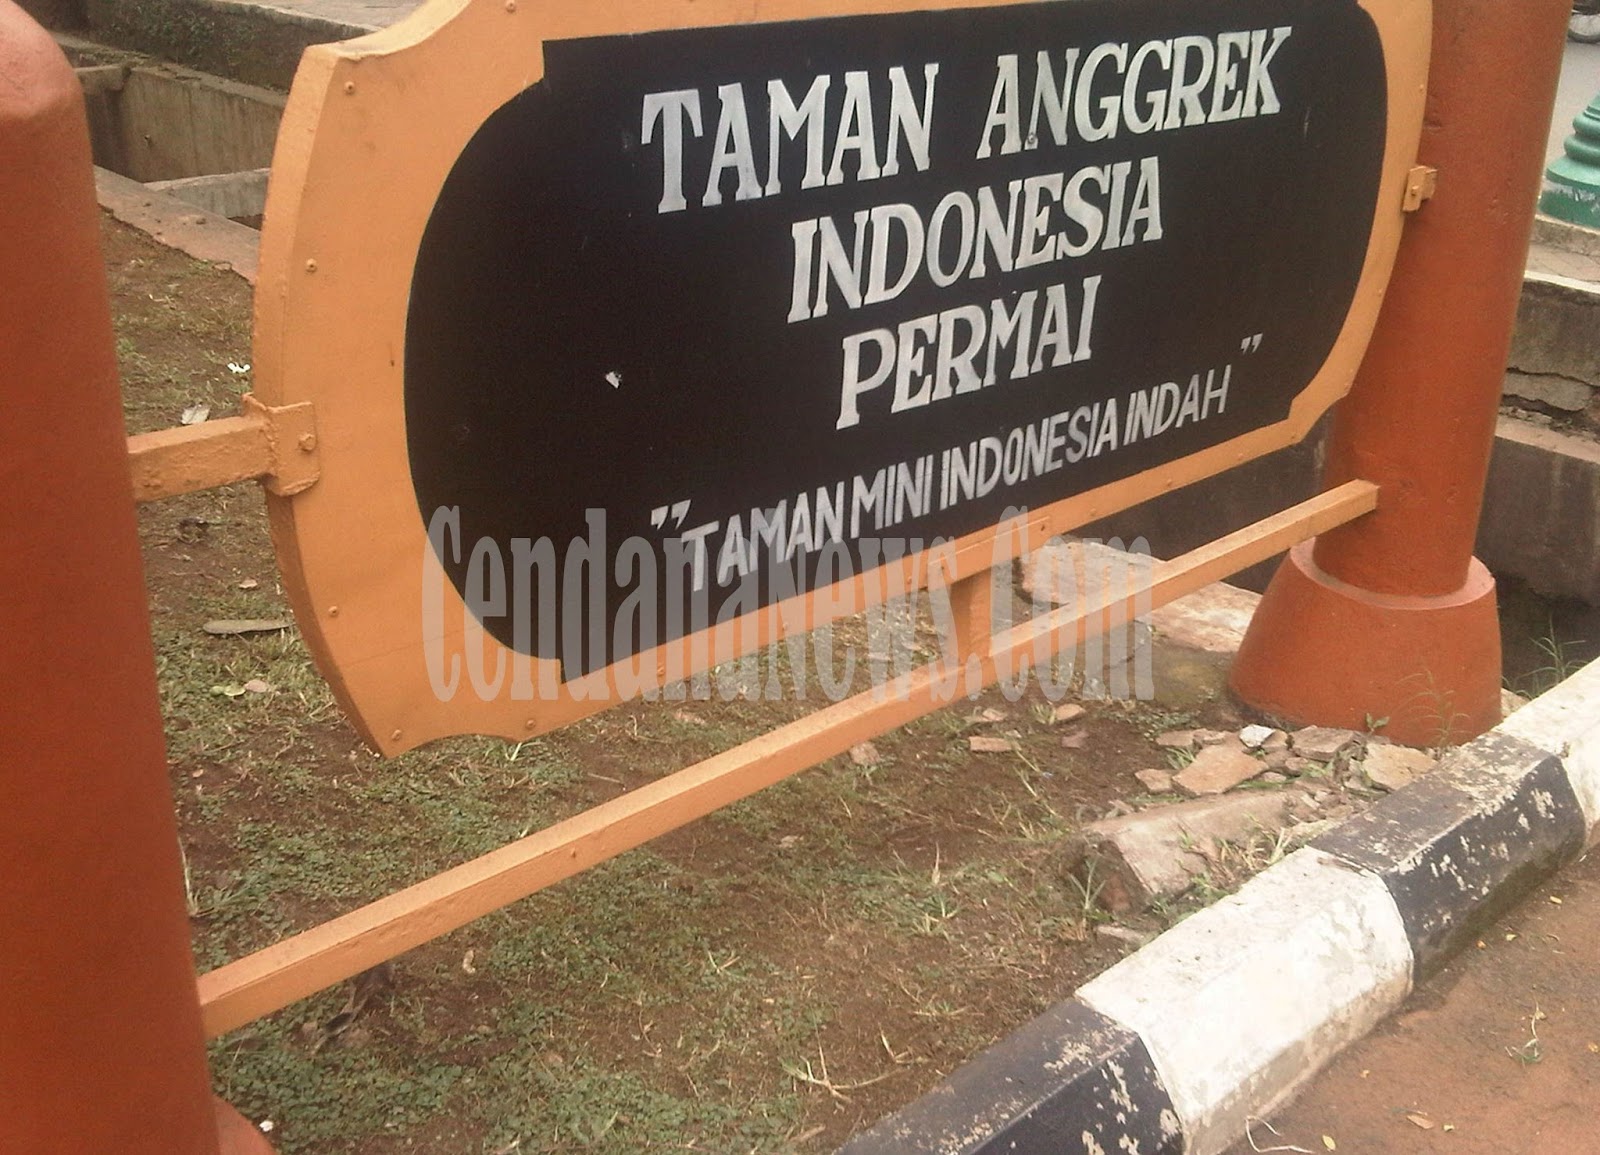 Mengenal Taman Anggrek Indonesia Permai di Taman Mini Indonesia Indah